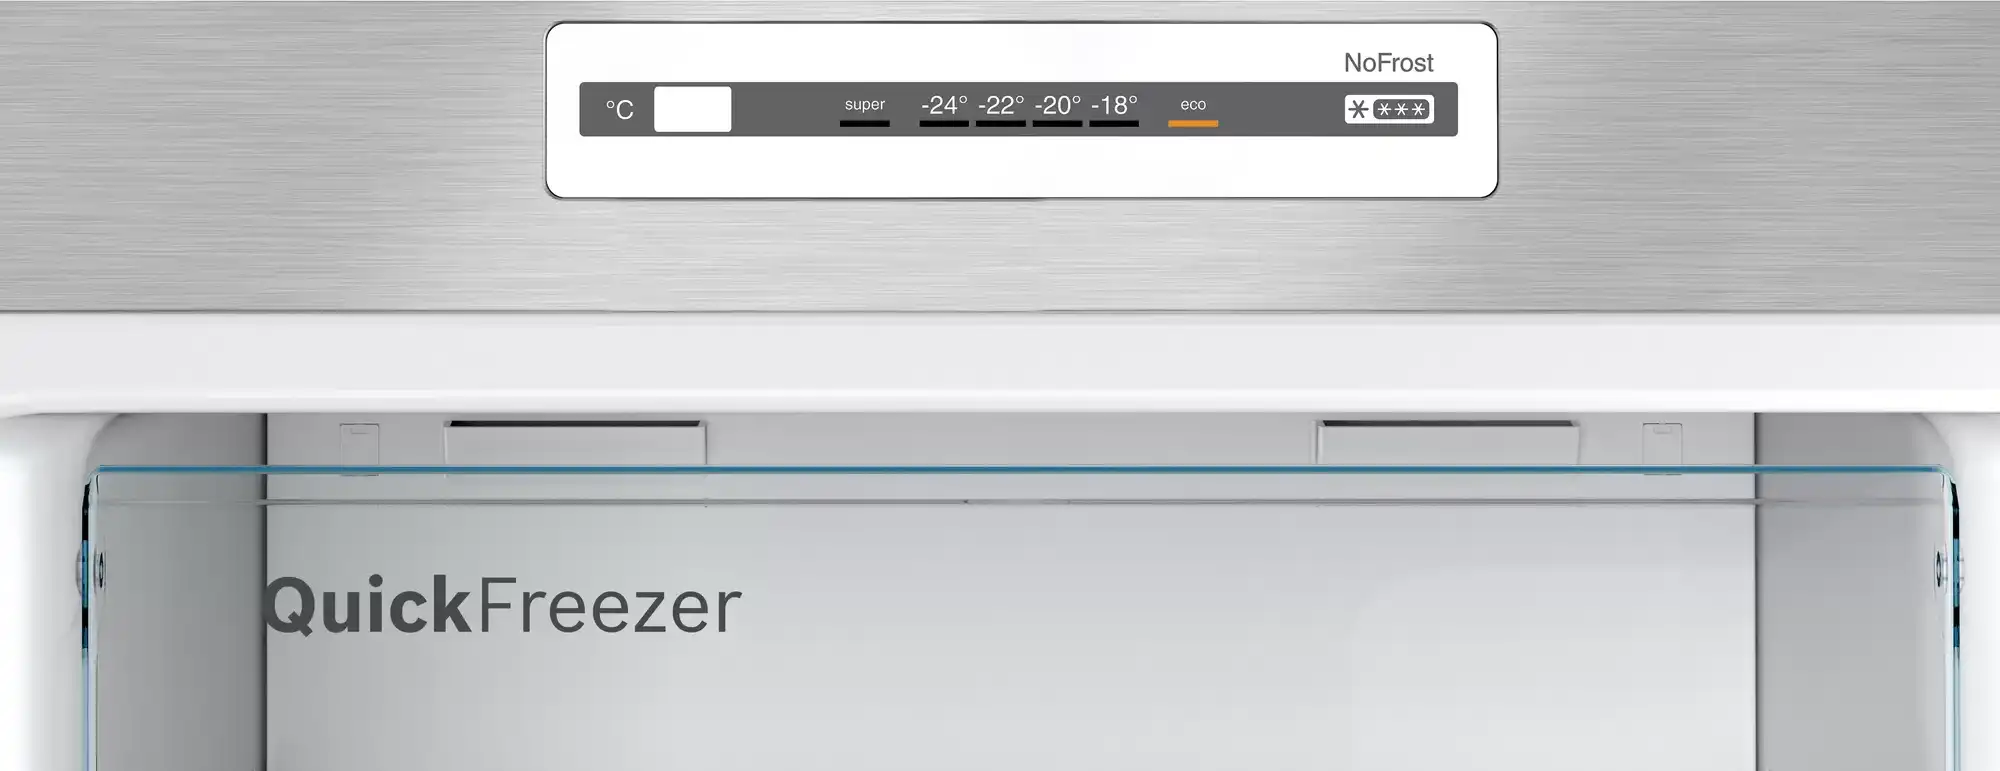 Bosch Refrigerator, No Frost, 285 Liters, 2 Doors, Inox Silver, KDN30N12E8